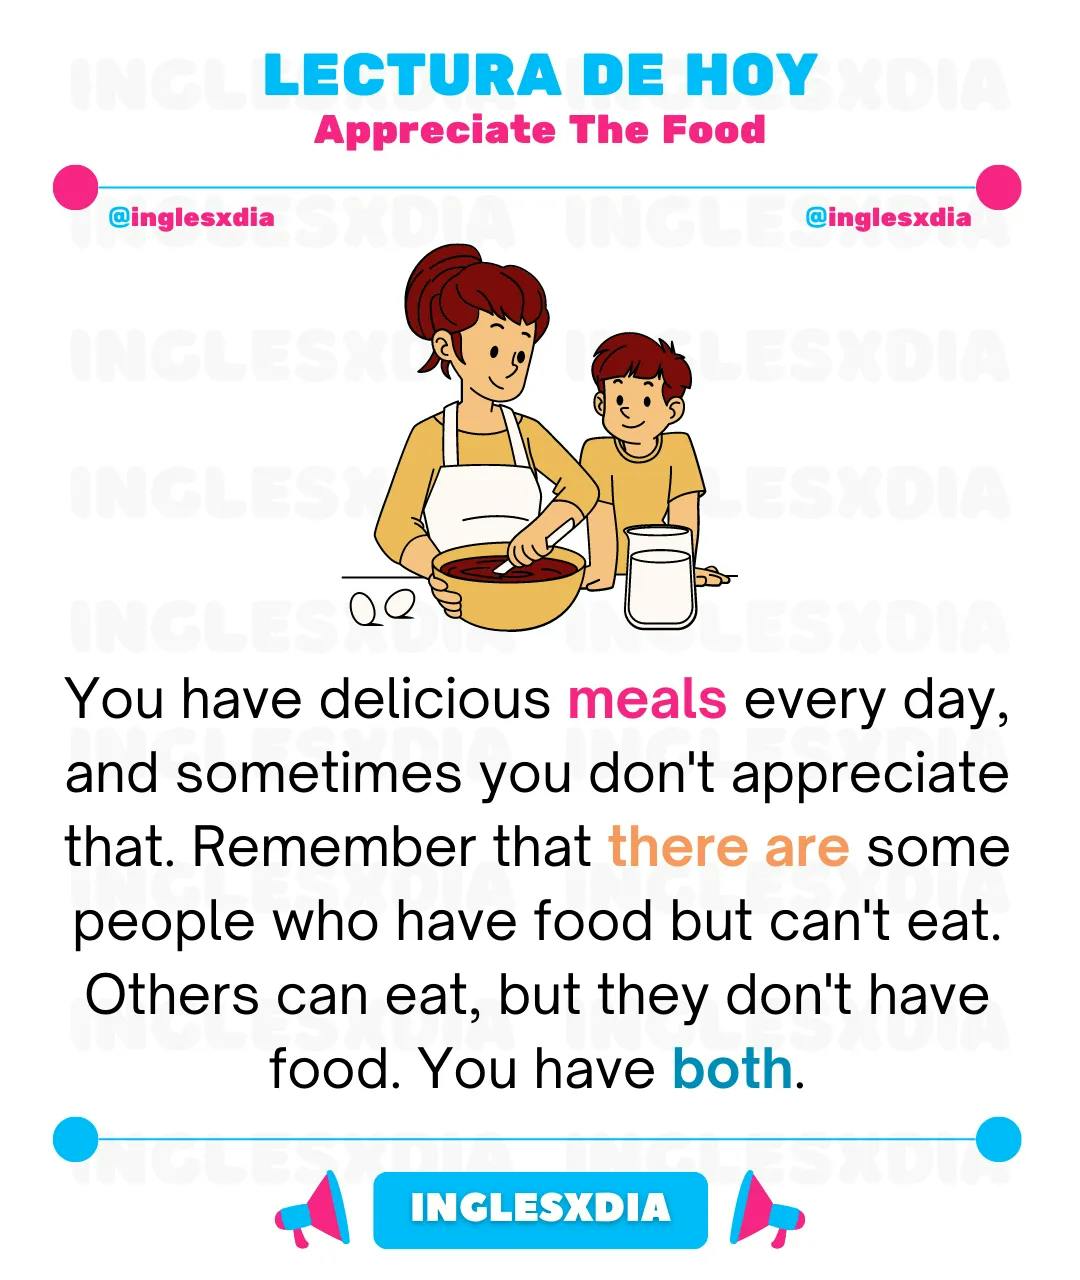 Appreciate The Food